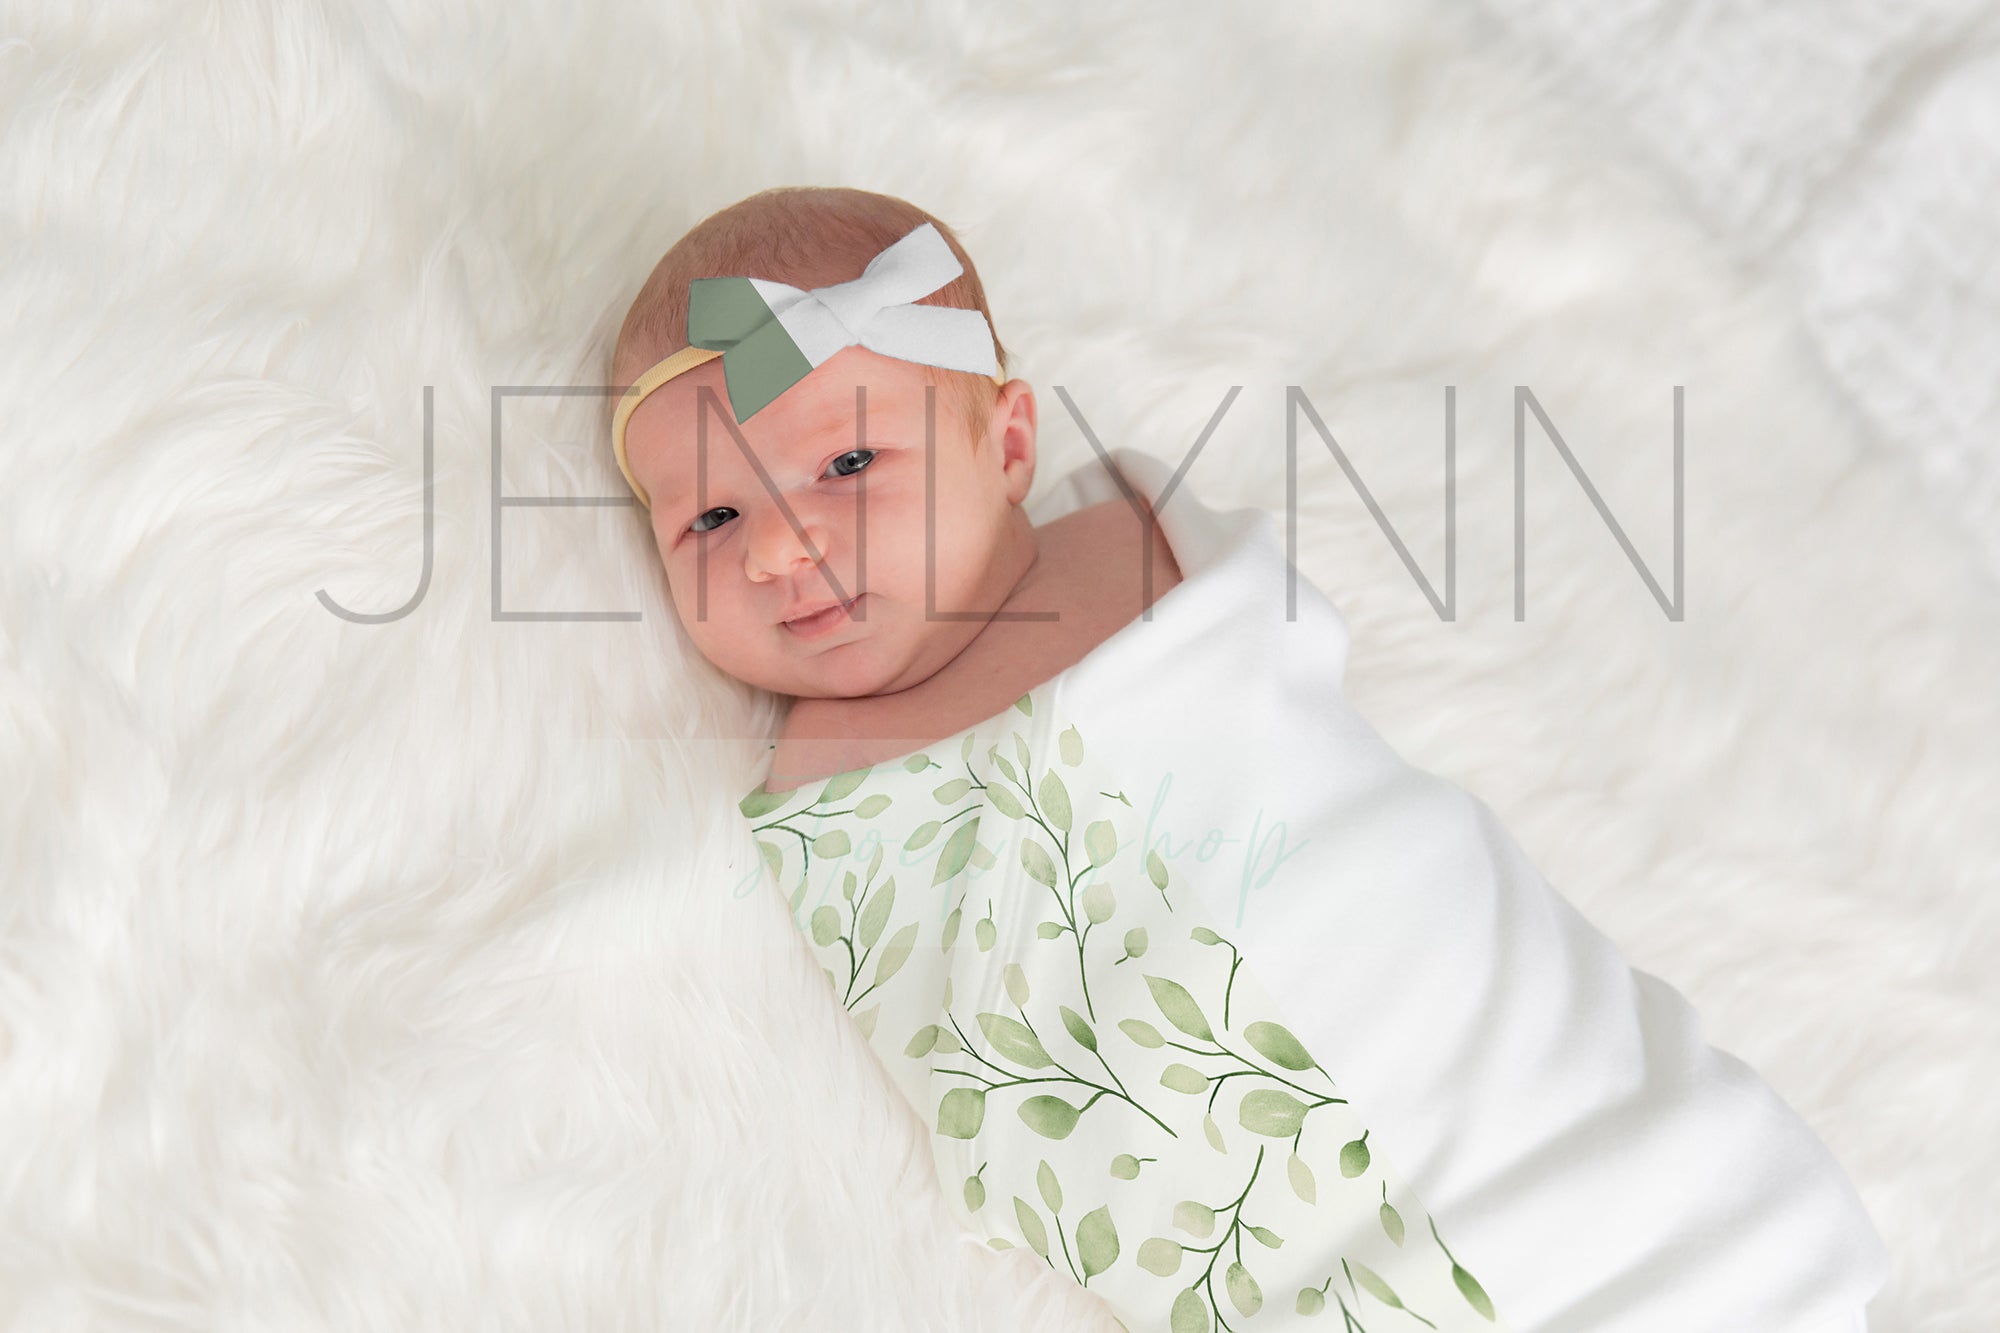 Download Jersey Baby Blanket Mockup 2 Psd Jenlynn Stock Shop